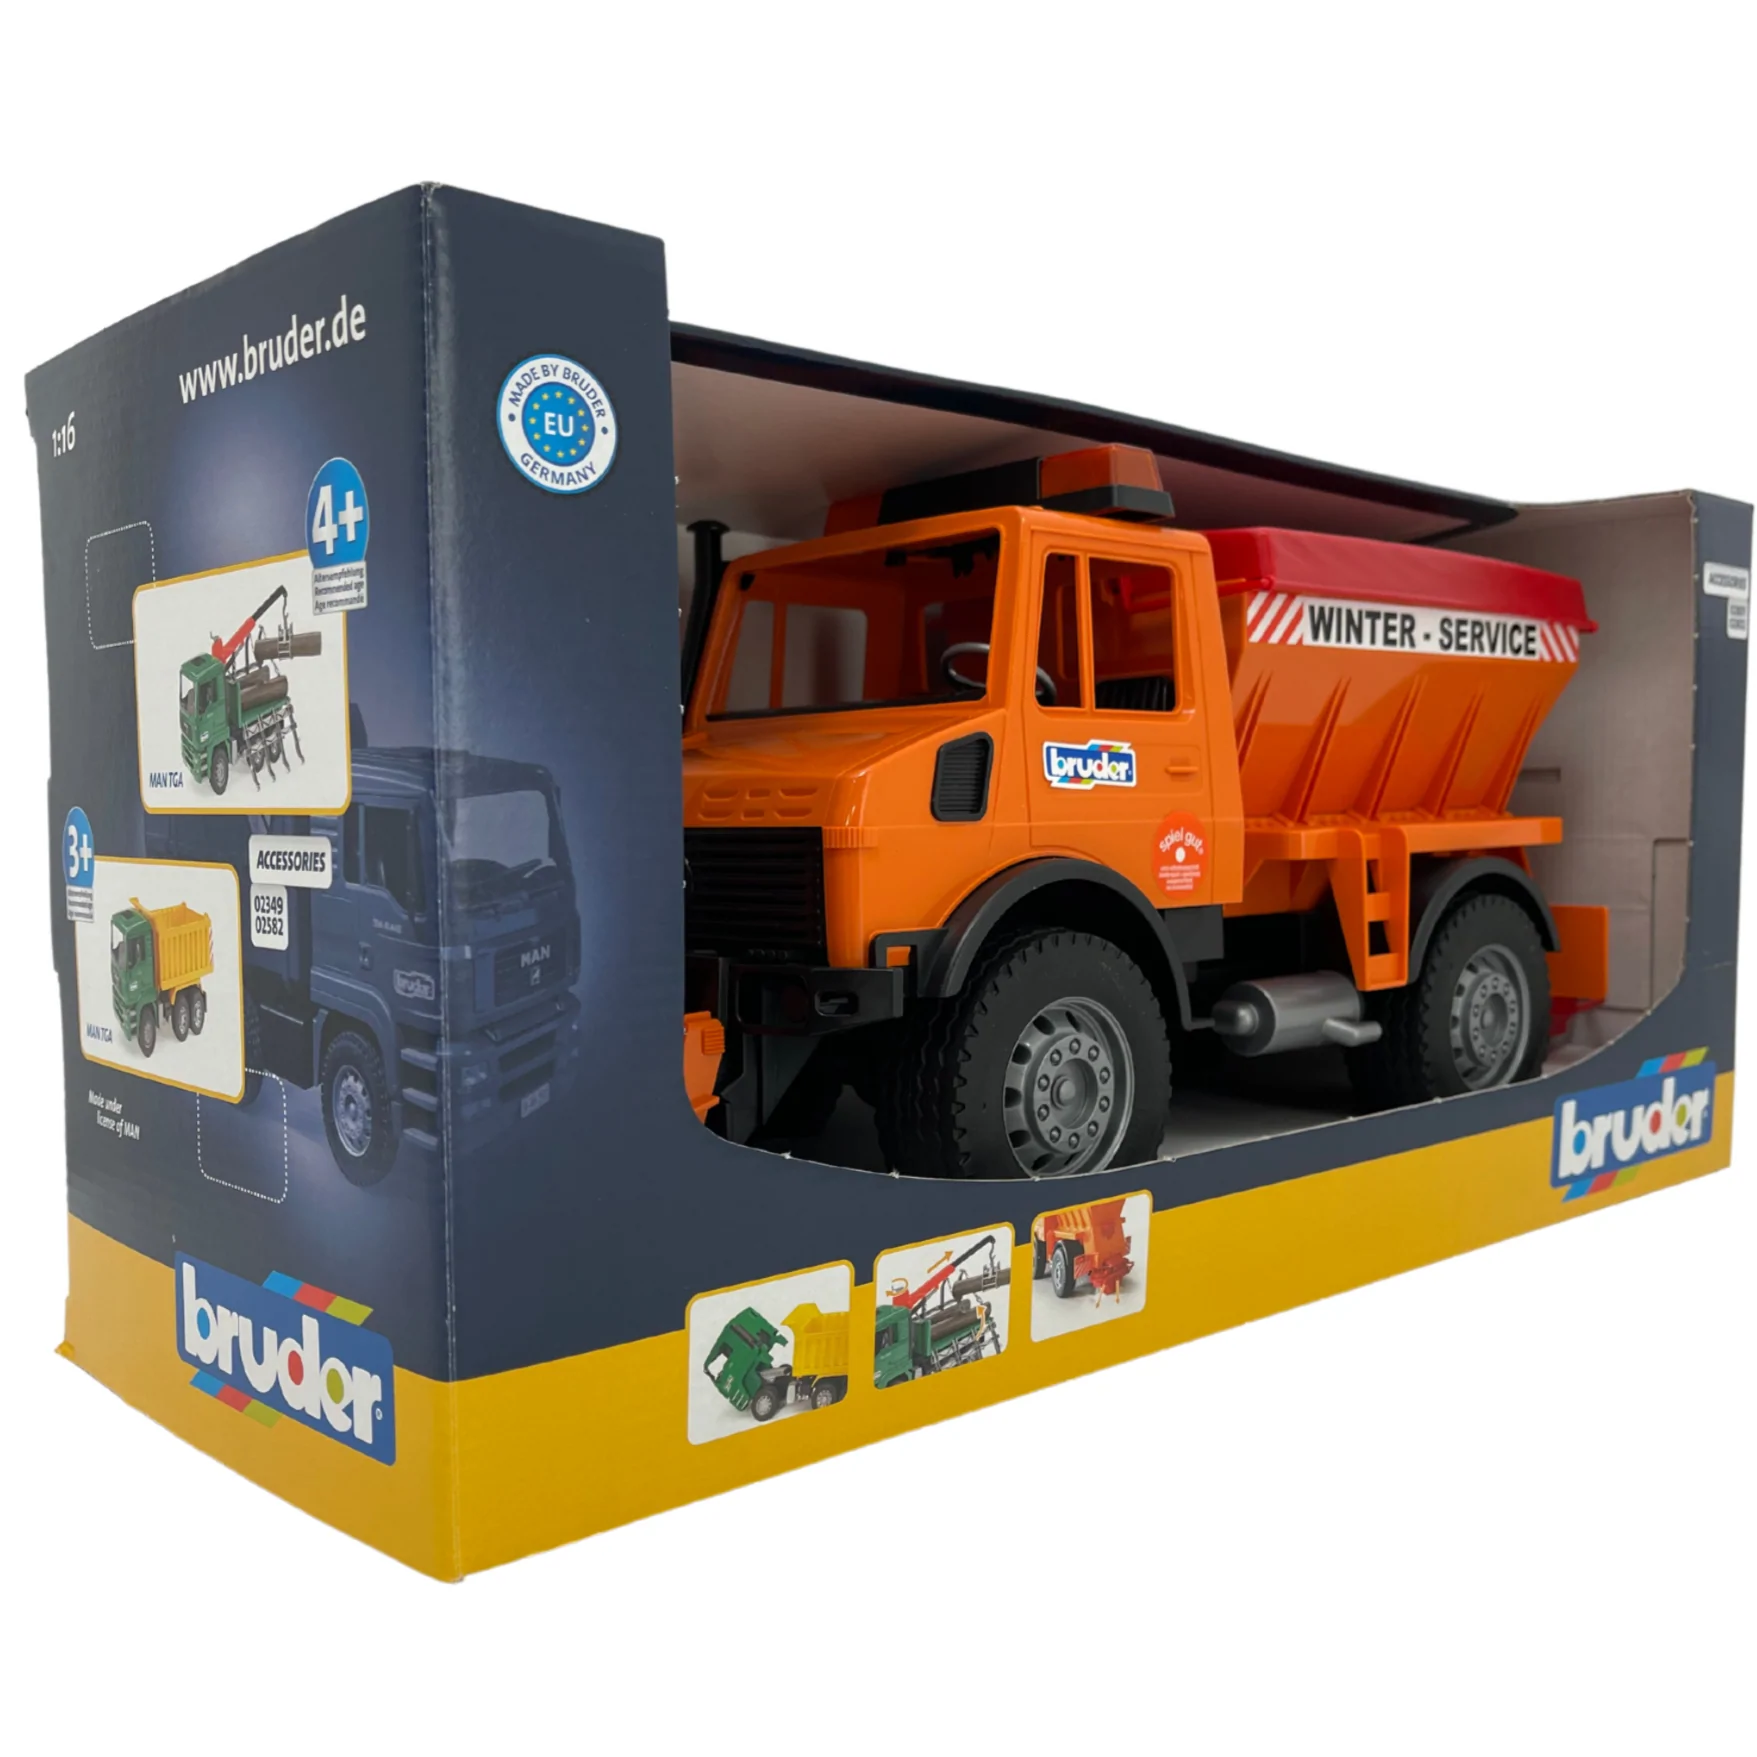 Bruder Snow Plow Toy / Winter Service Toy Truck / Road Maintenance Toy / Orange & Red